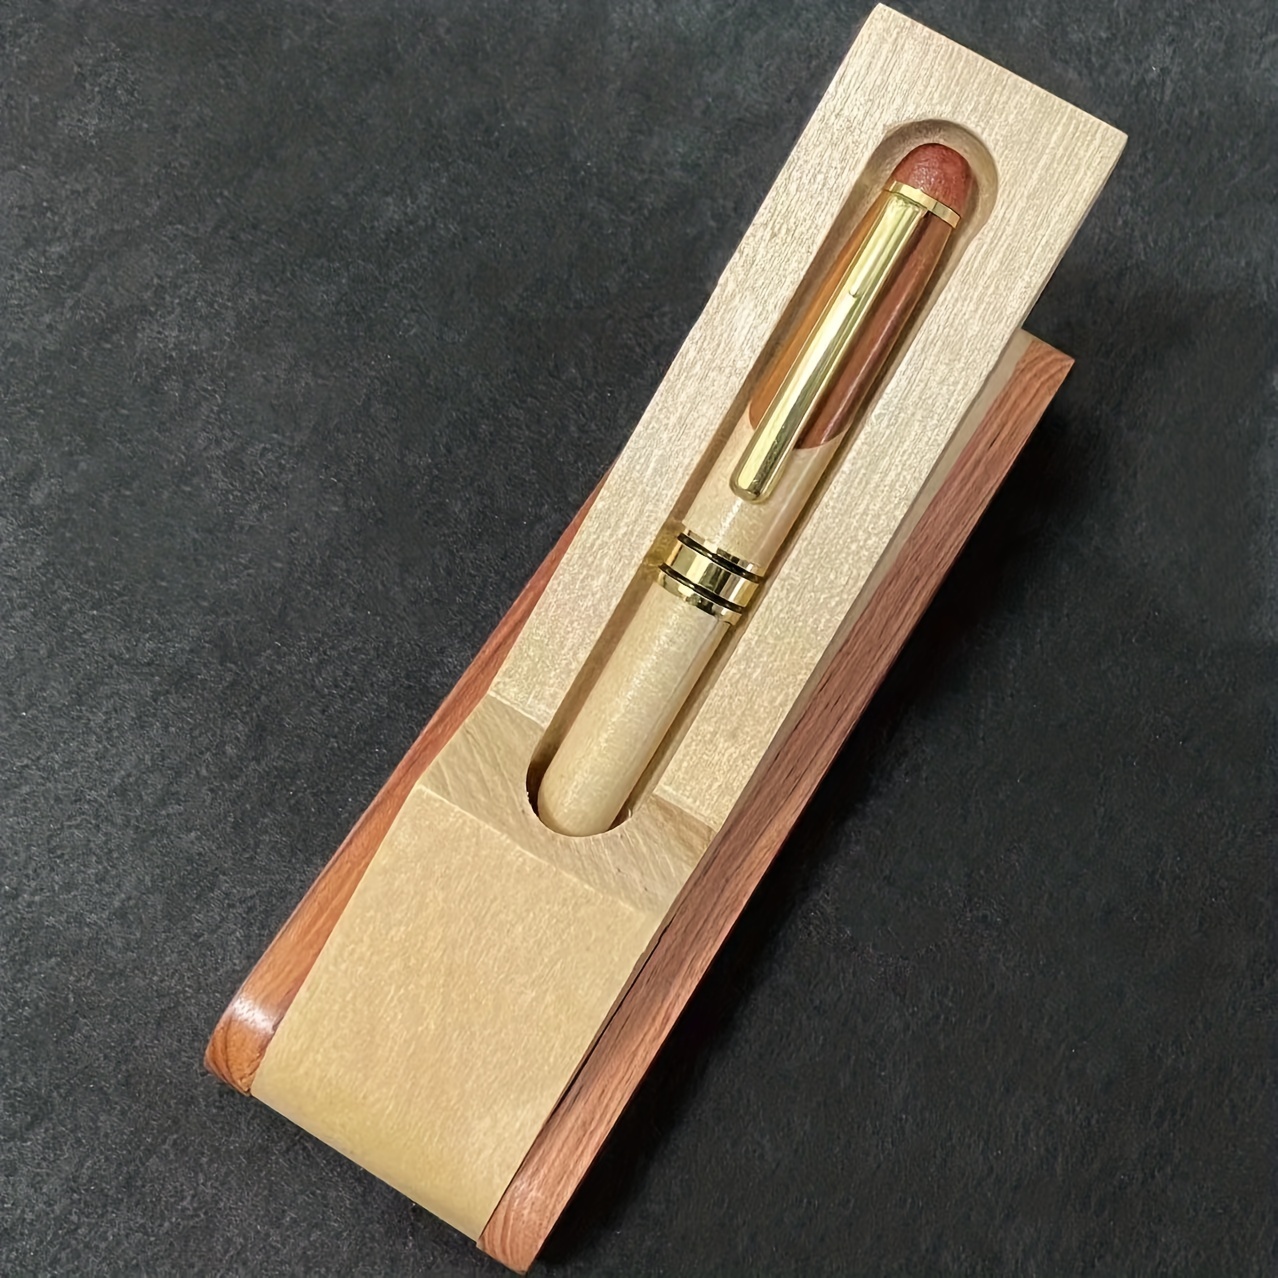 Wood Pen Set in Gift Box